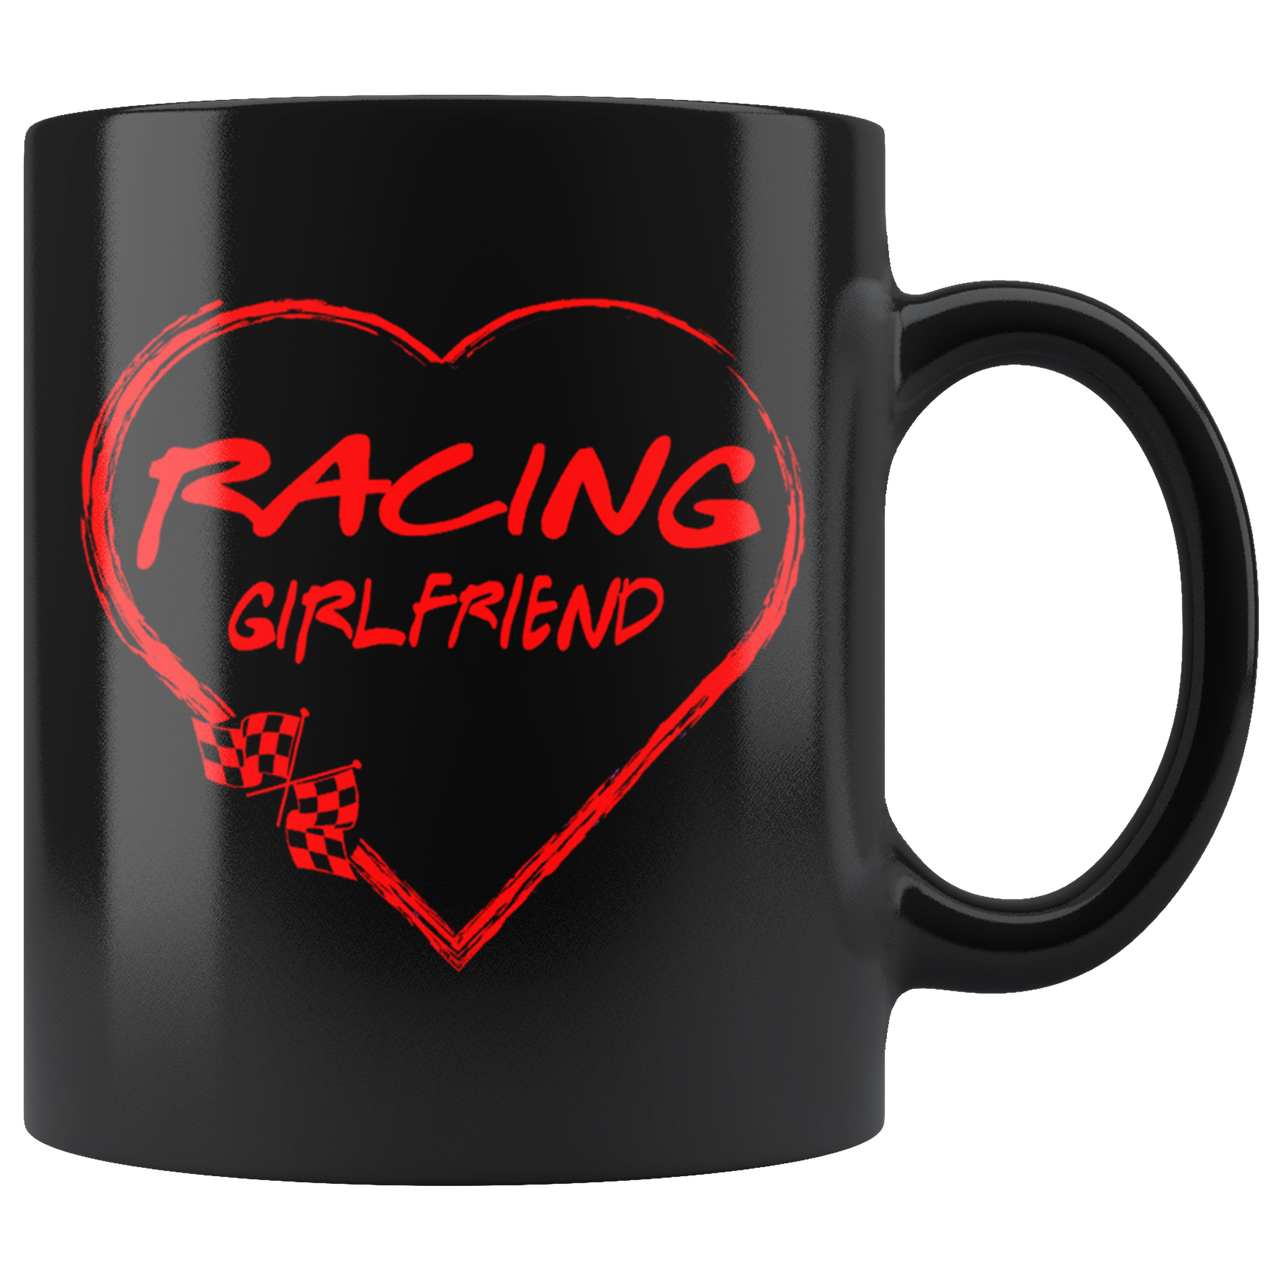 Racing Girlfriend Heart Mug!